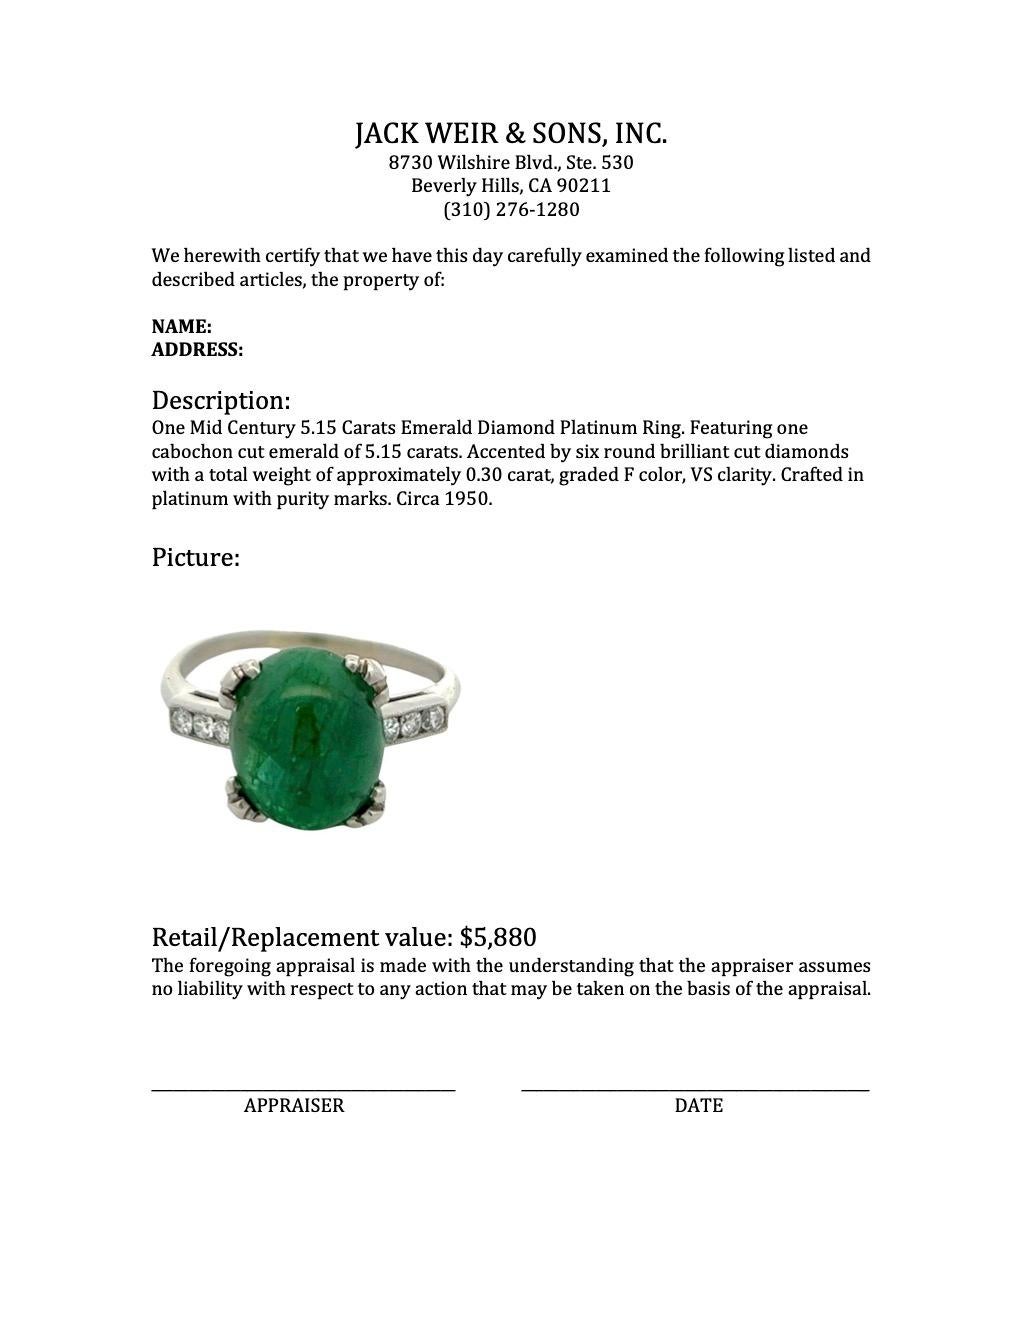 Midcentury 5.15 Carats Emerald Diamond Platinum Ring 2